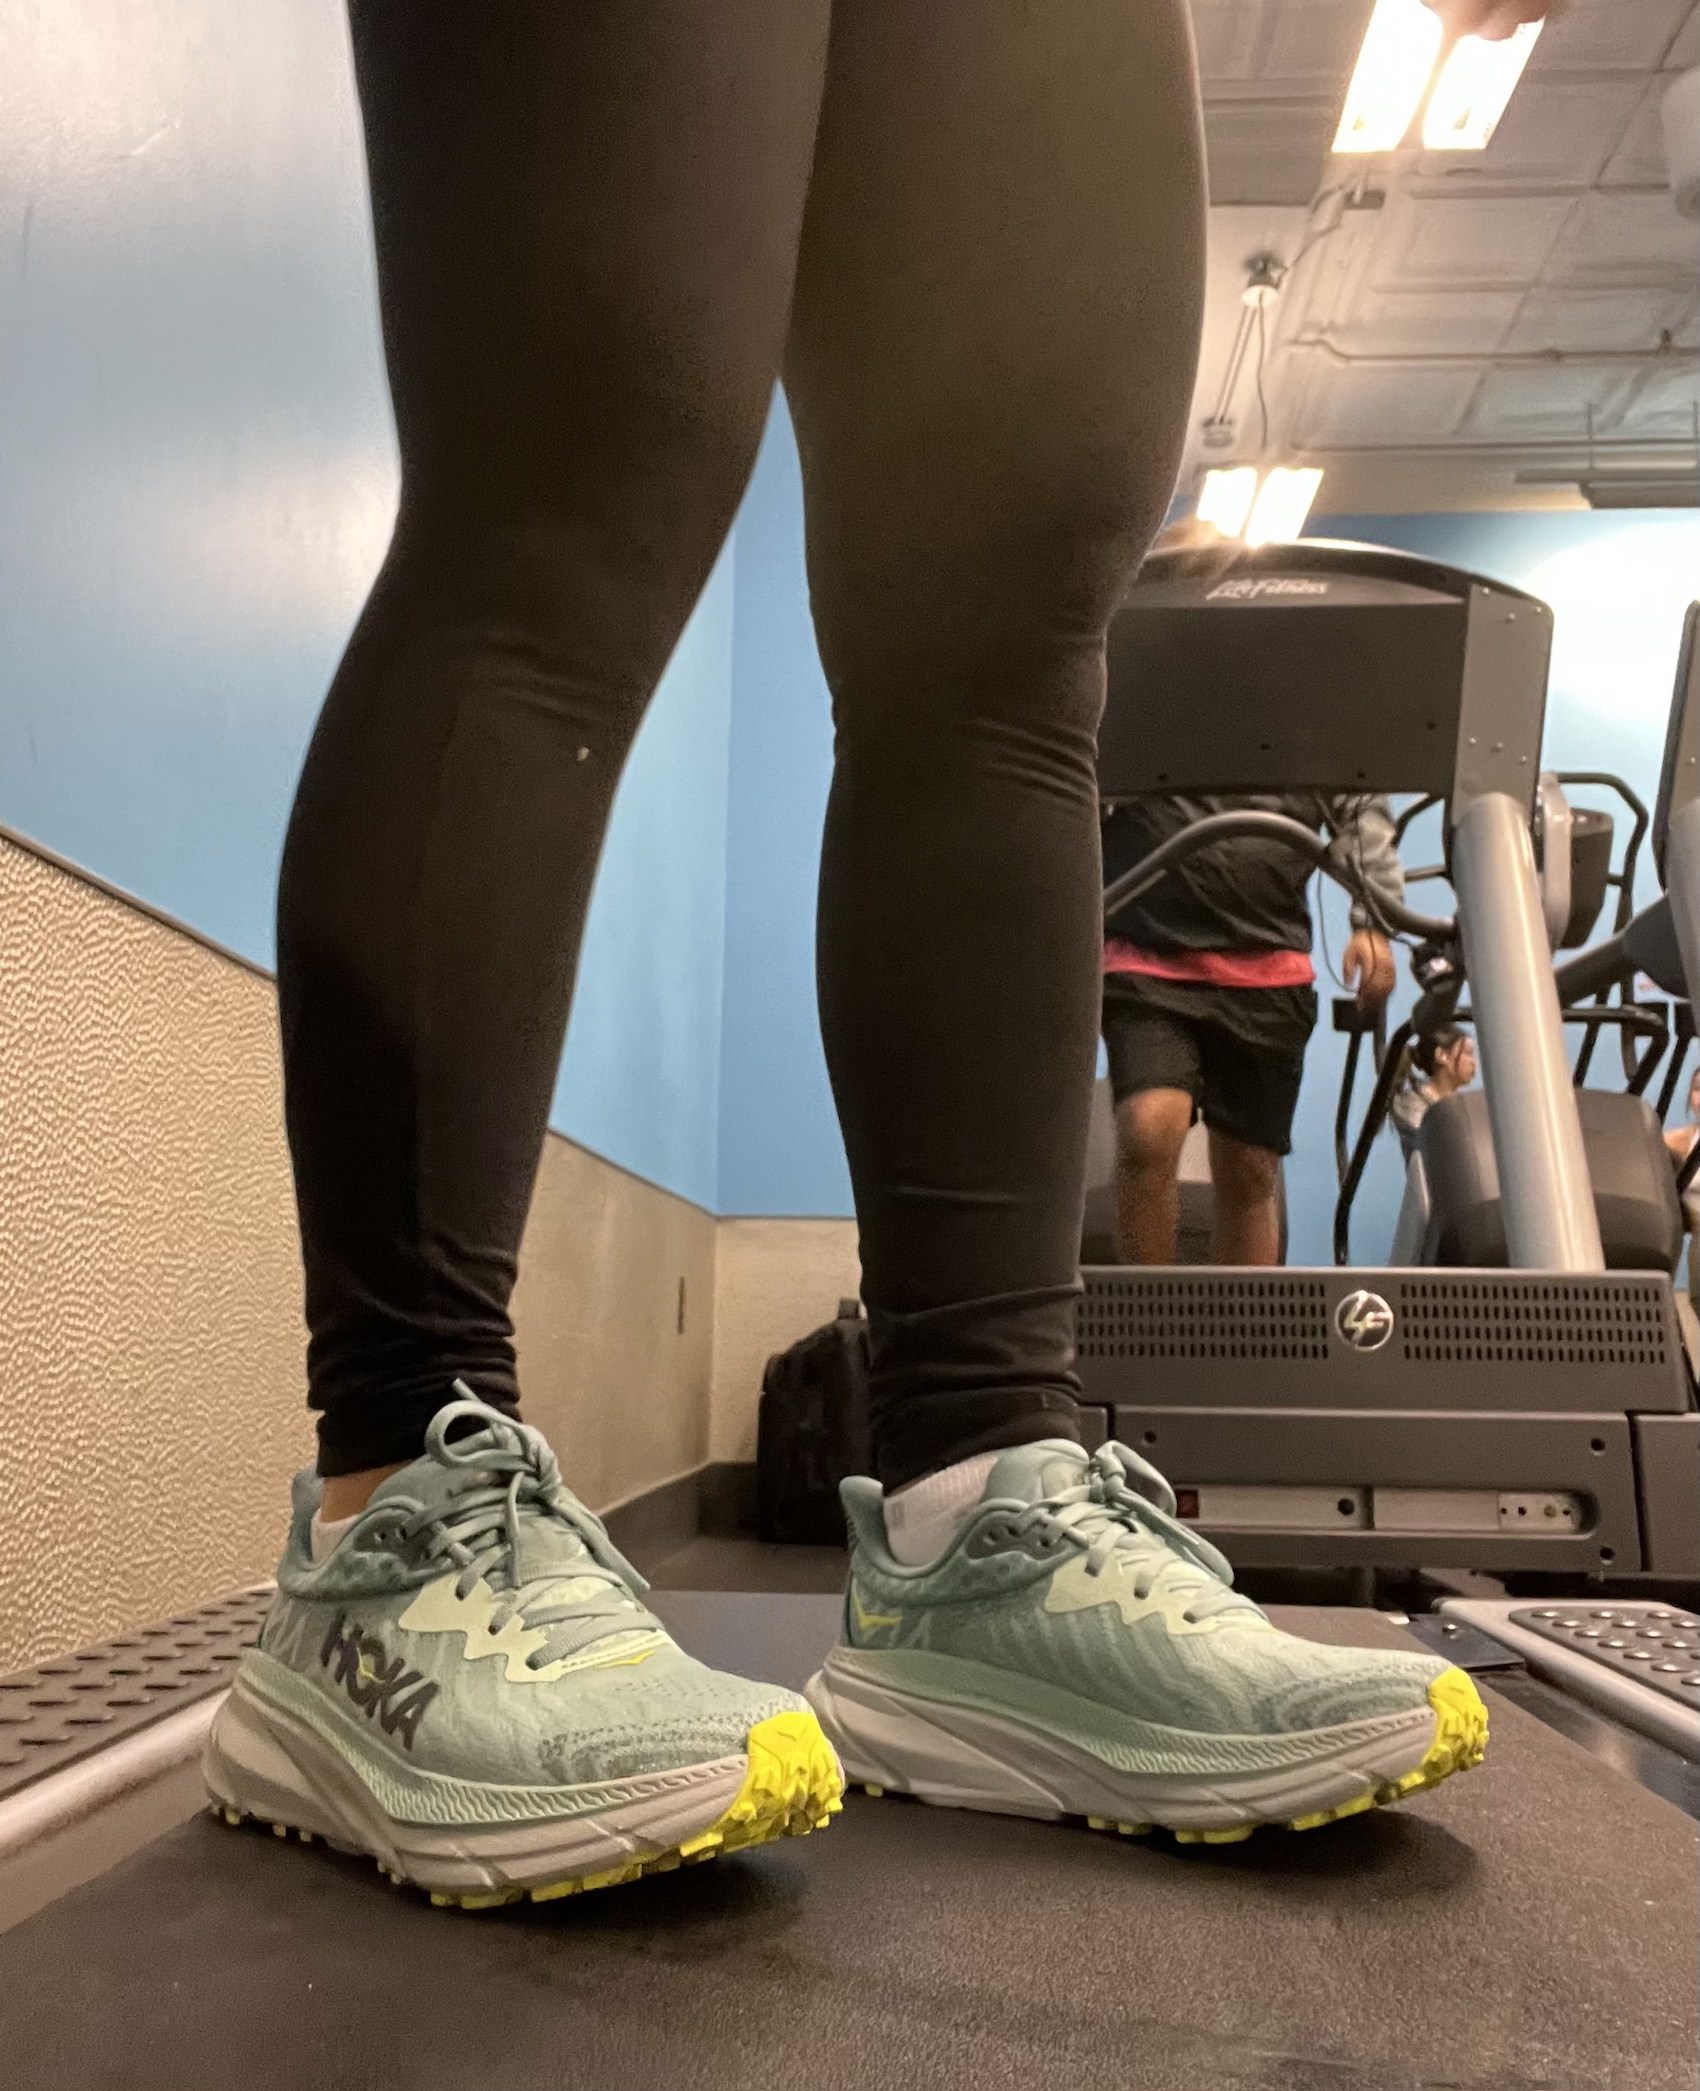 person wearing hoka sneakers on treadmill